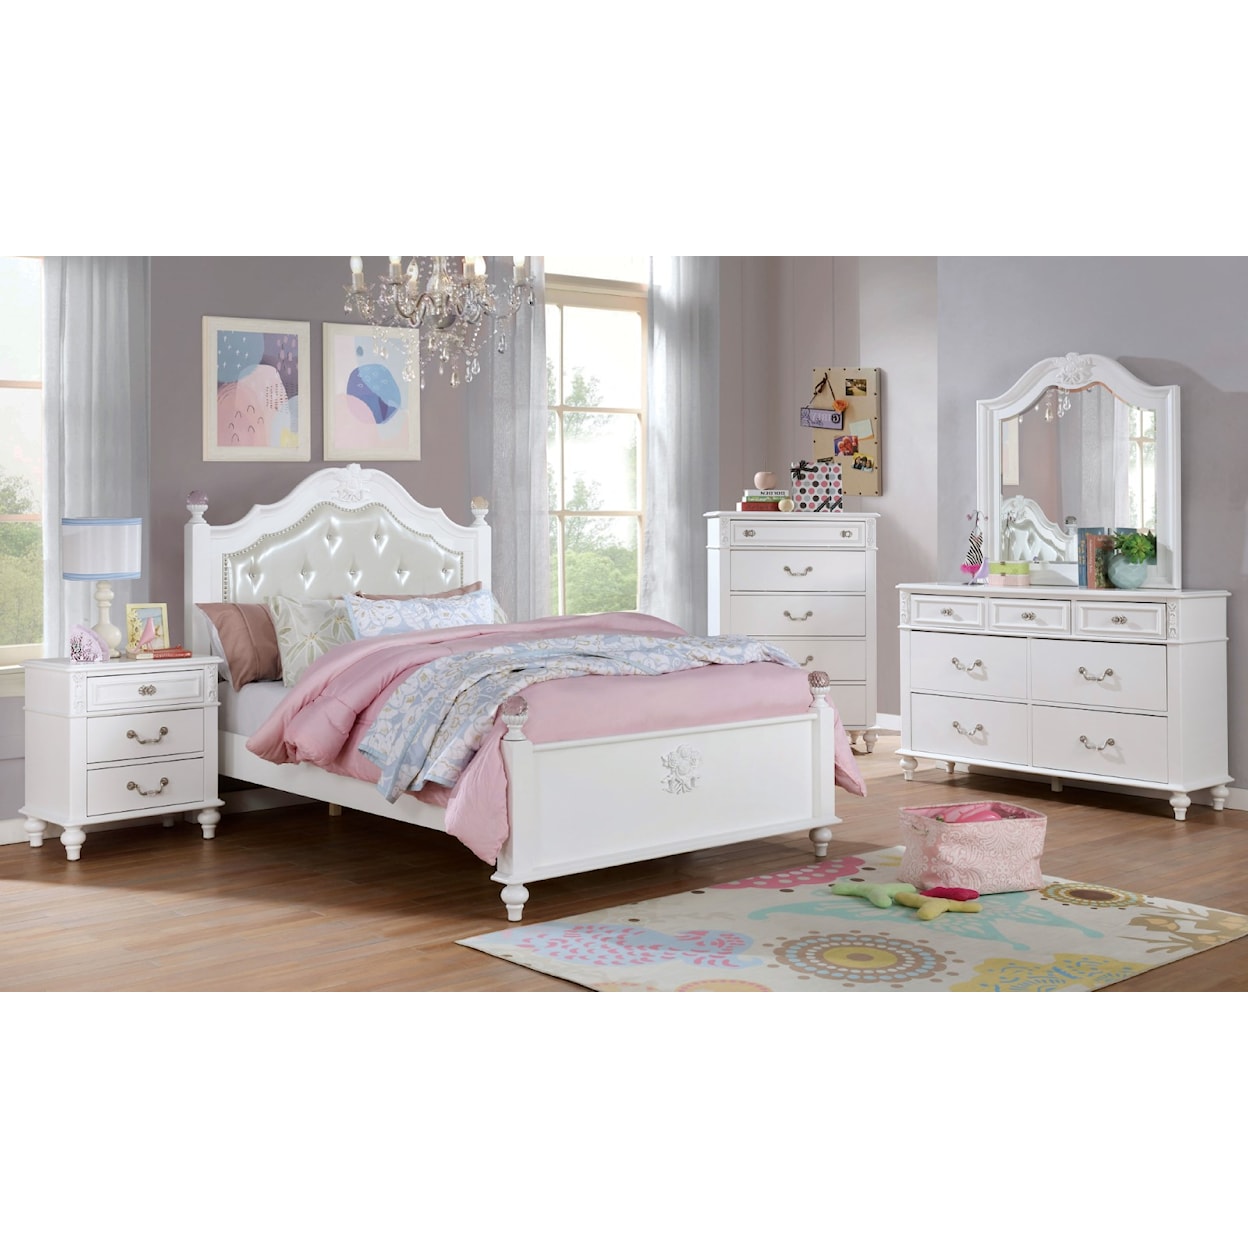 Furniture of America Belva 4 Pc. Full Bedroom Set